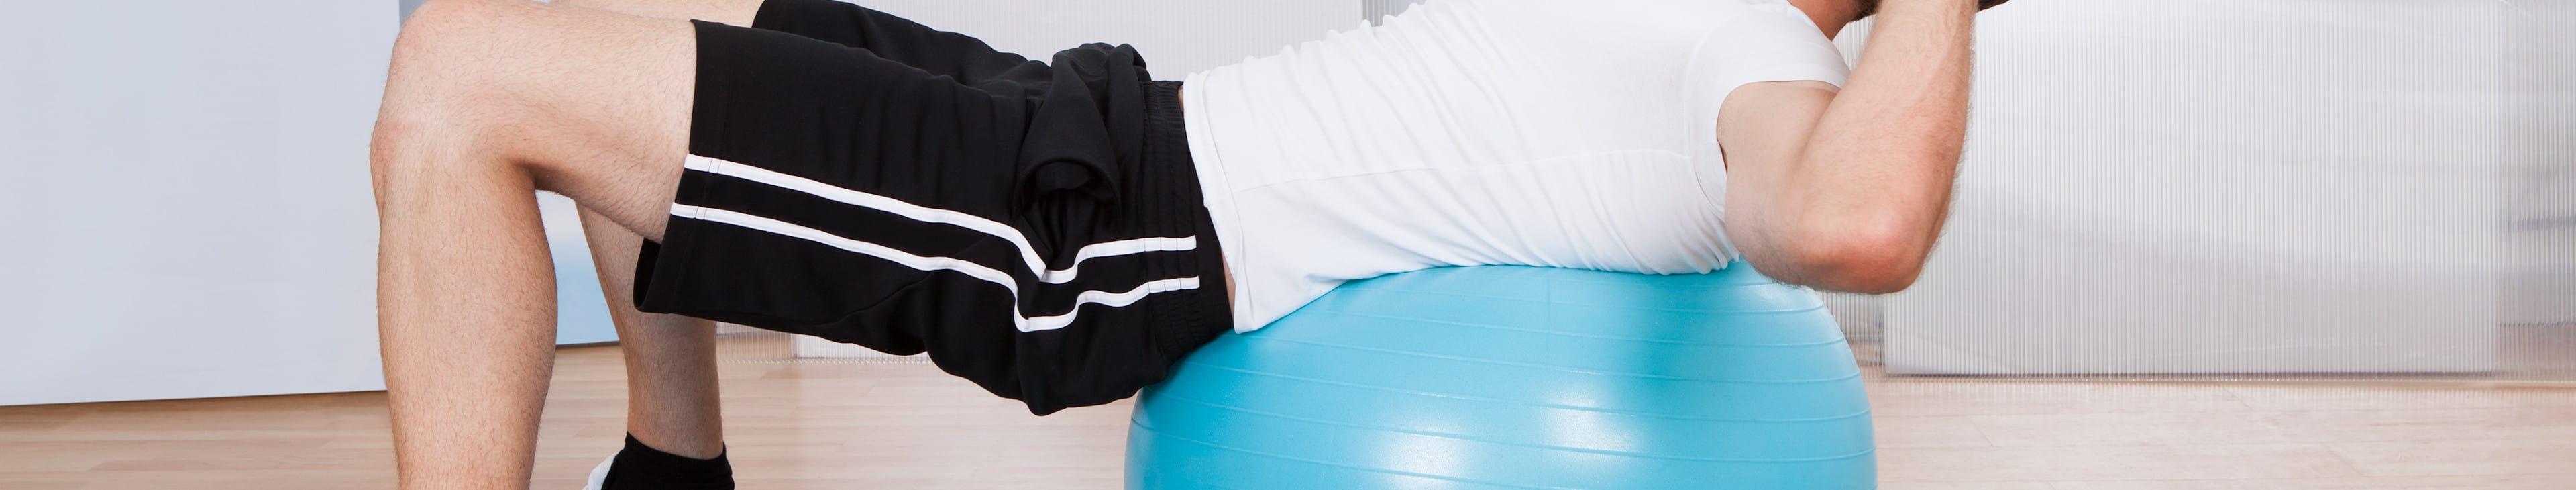 Pilates con gomas elásticas: un cuerpo tonificado - Respira Pilates